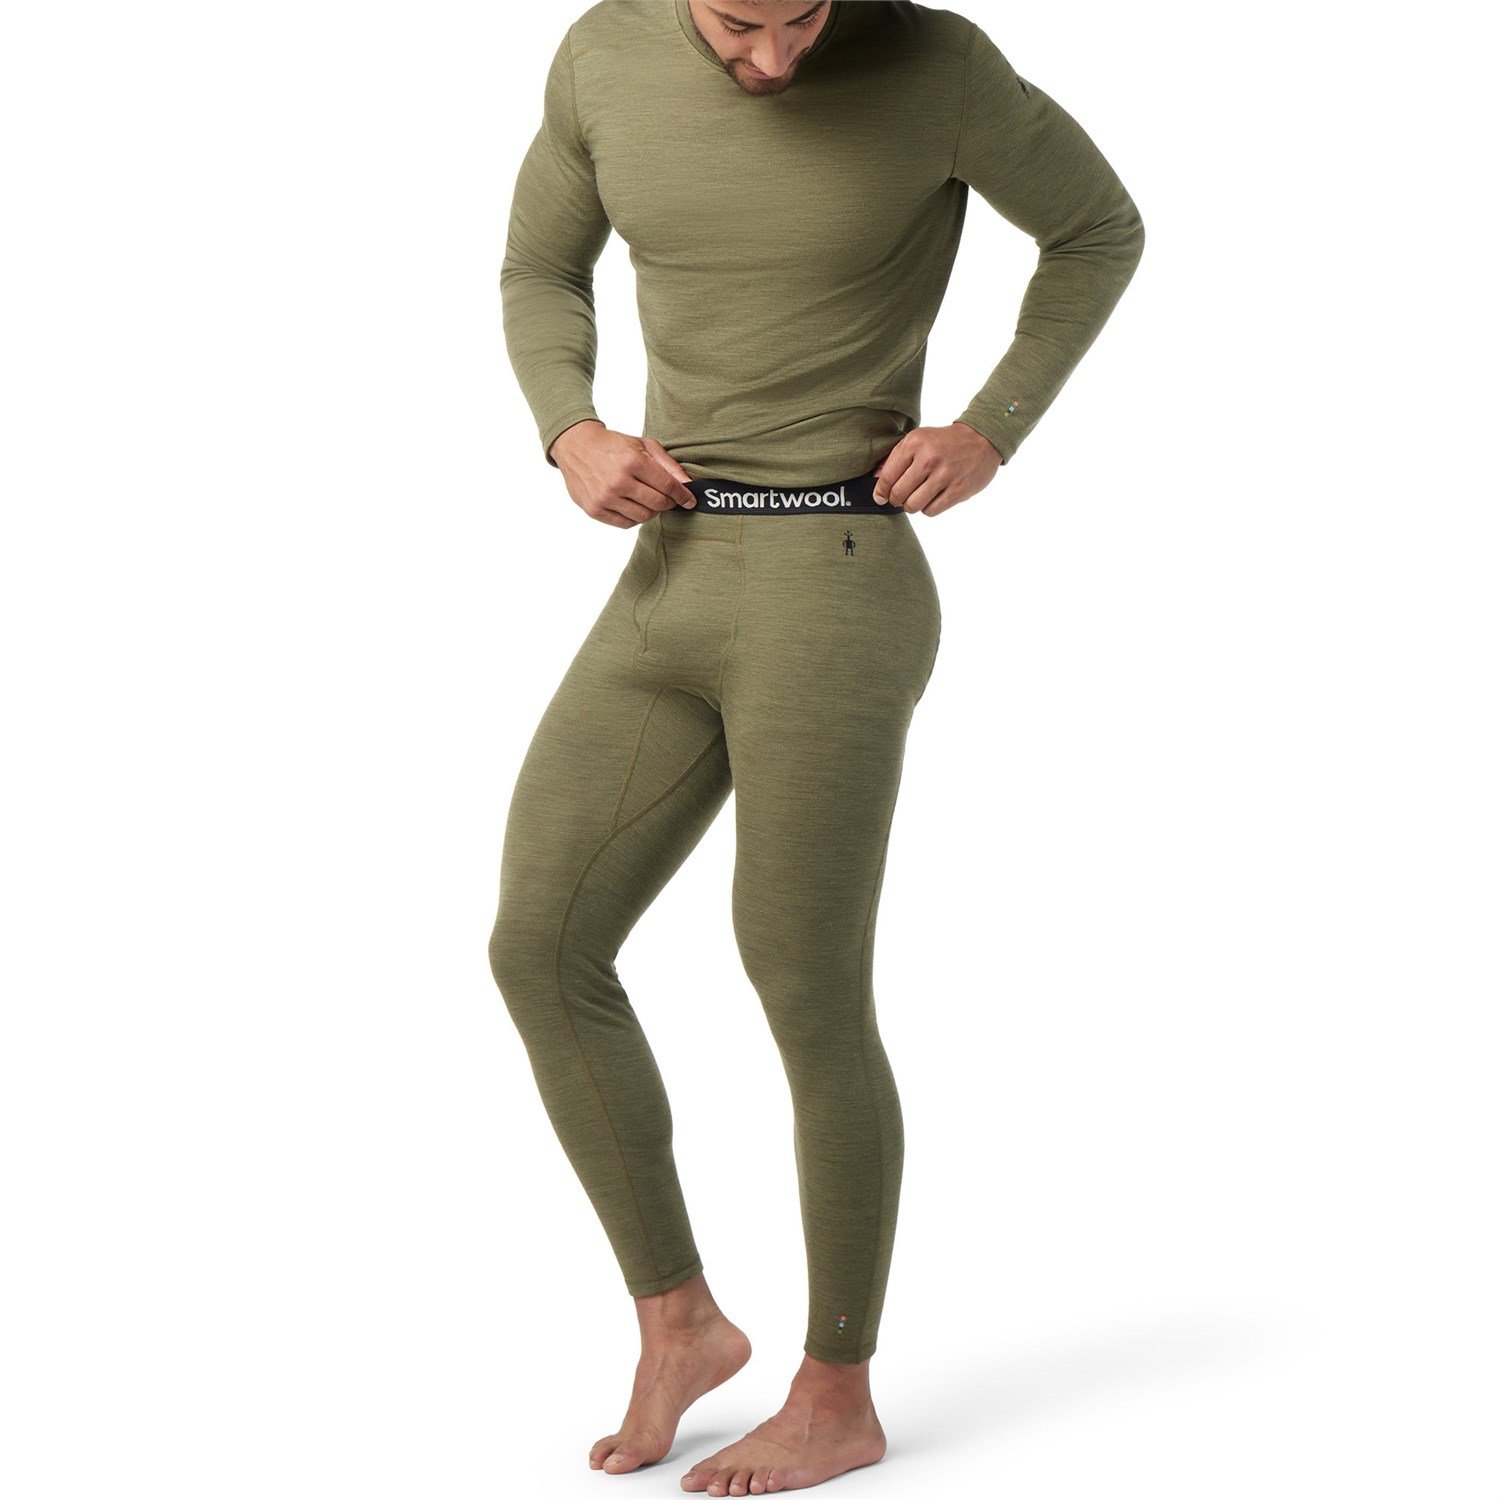 Men's Merino Wool Base Layers  Tops & Bottoms – Minus33 Merino Wool  Clothing